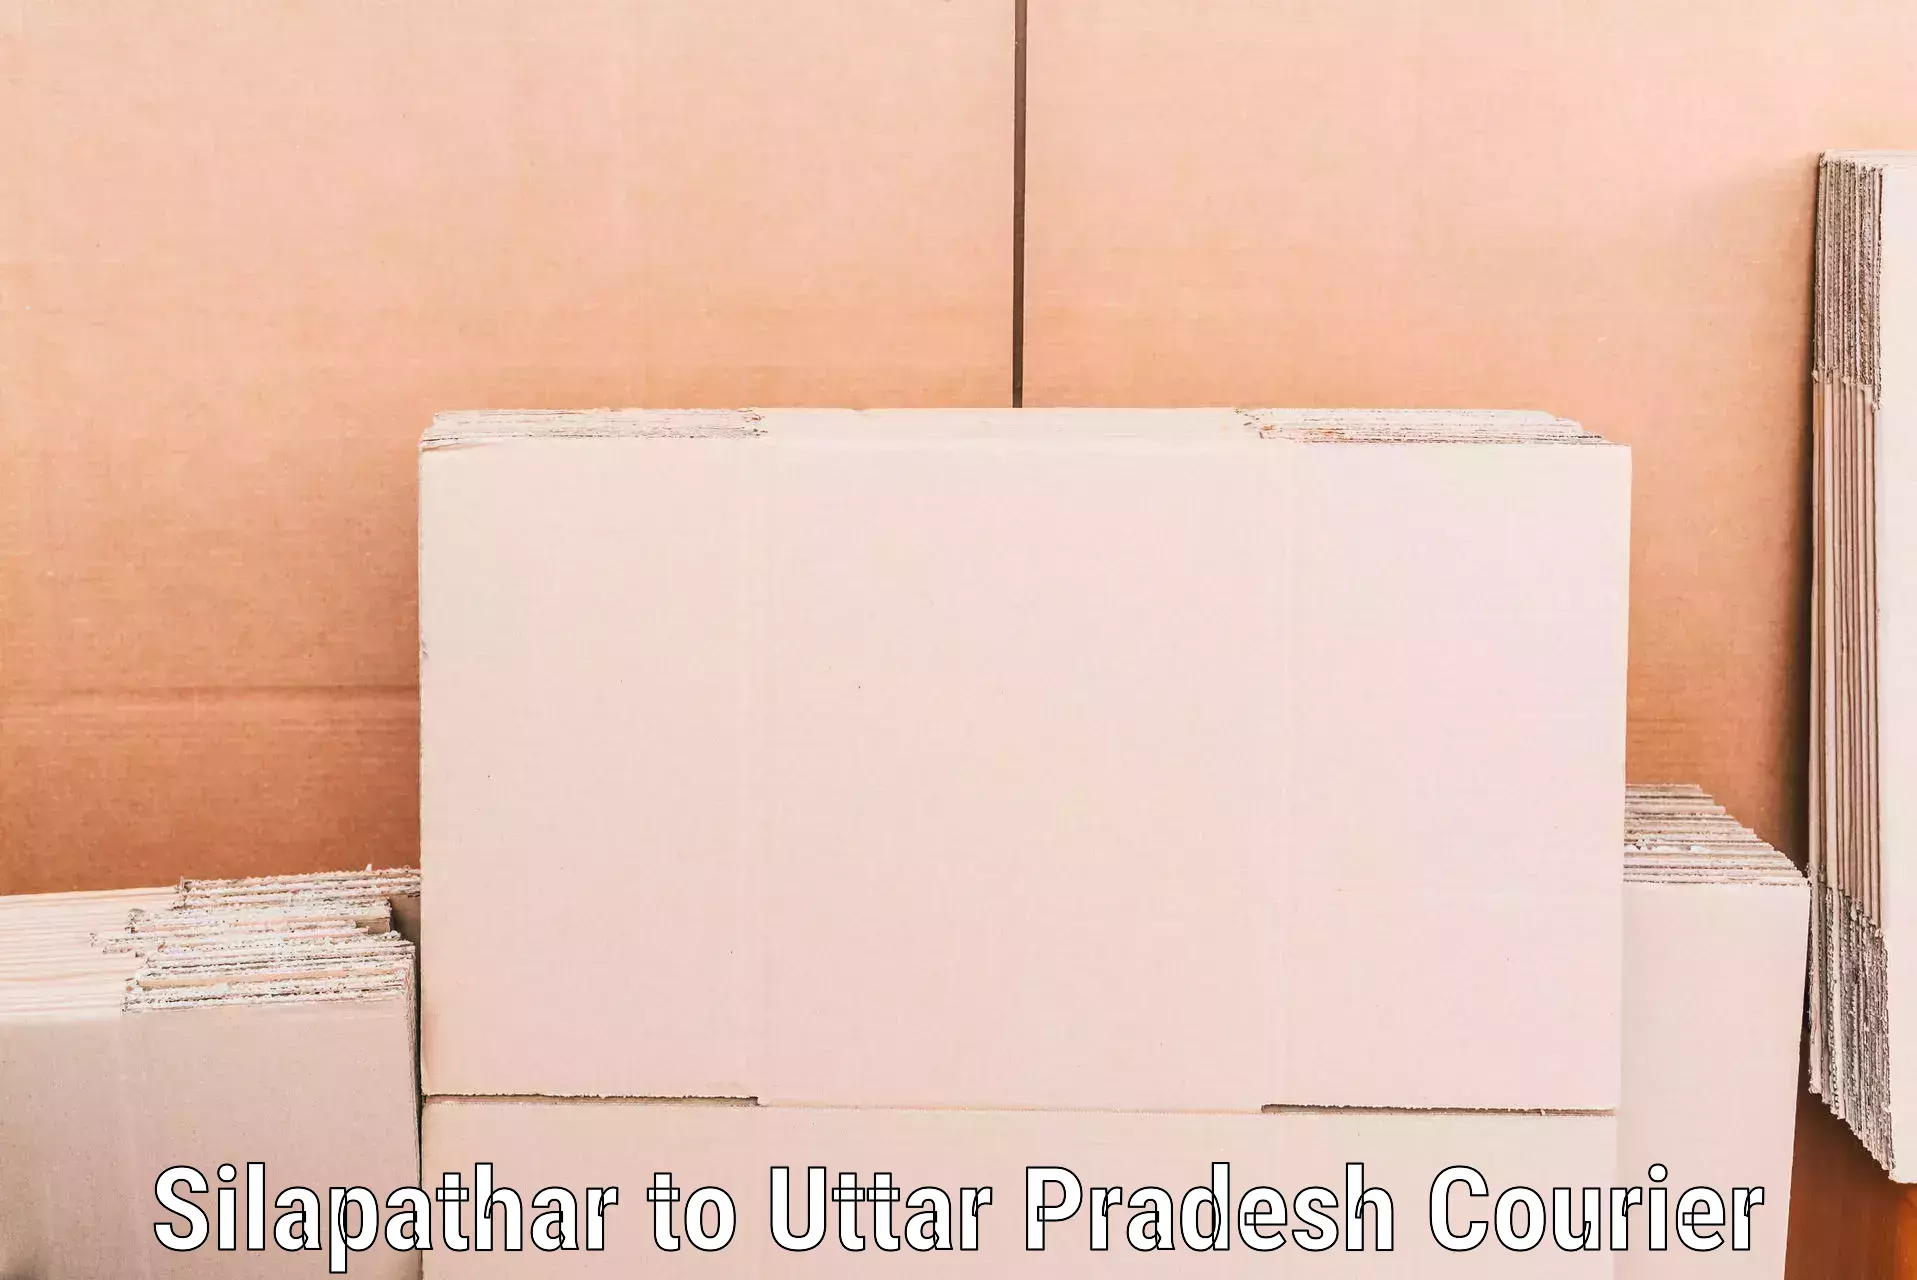 Moving and packing experts Silapathar to Dhaurahara